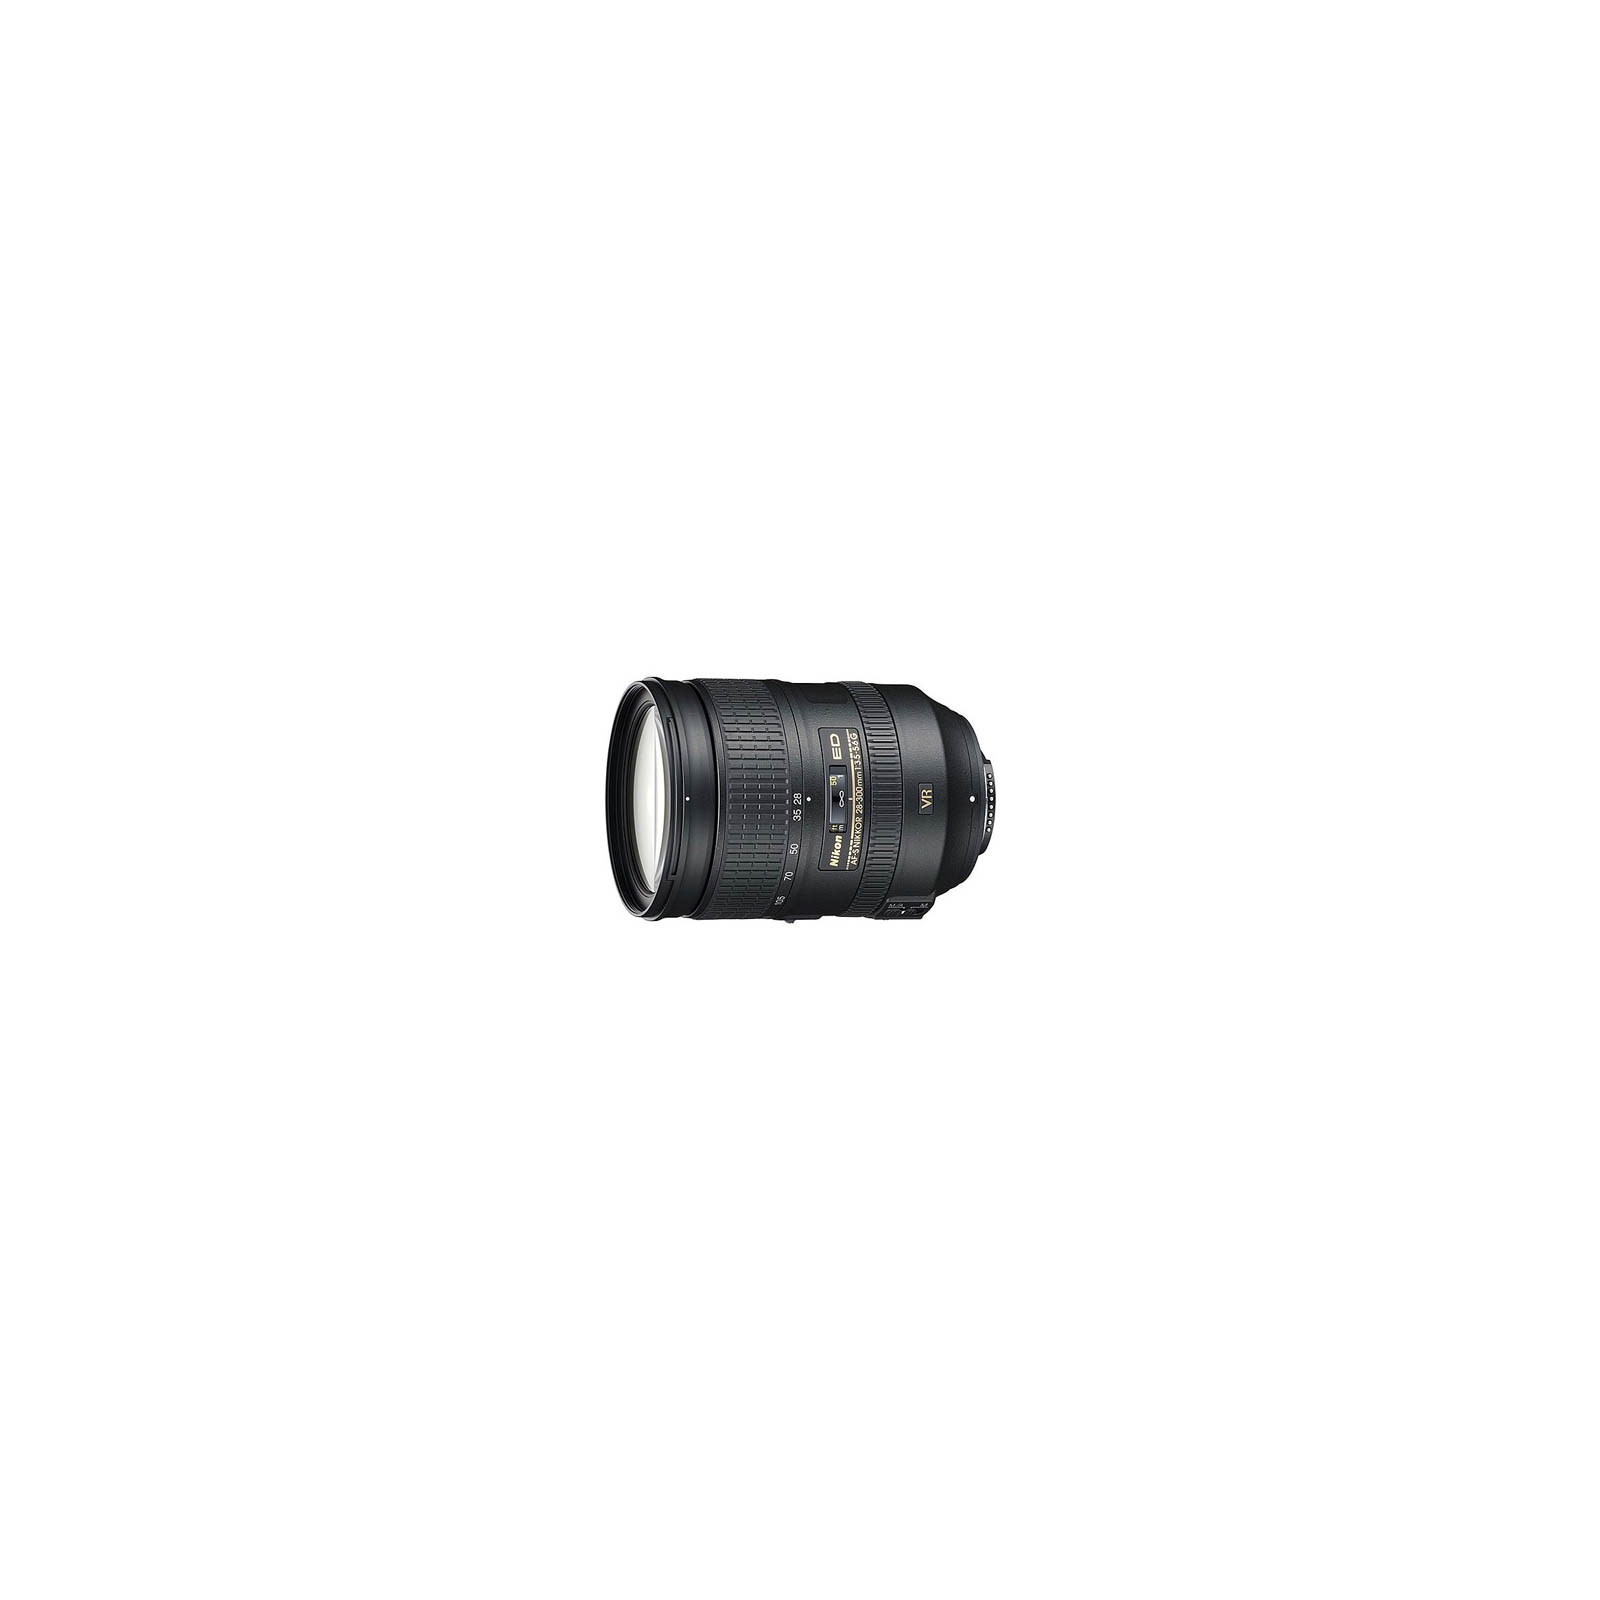 Об'єктив Nikon AF-S 28-300mm f/3.5-5.6G ED VR (JAA808DA)